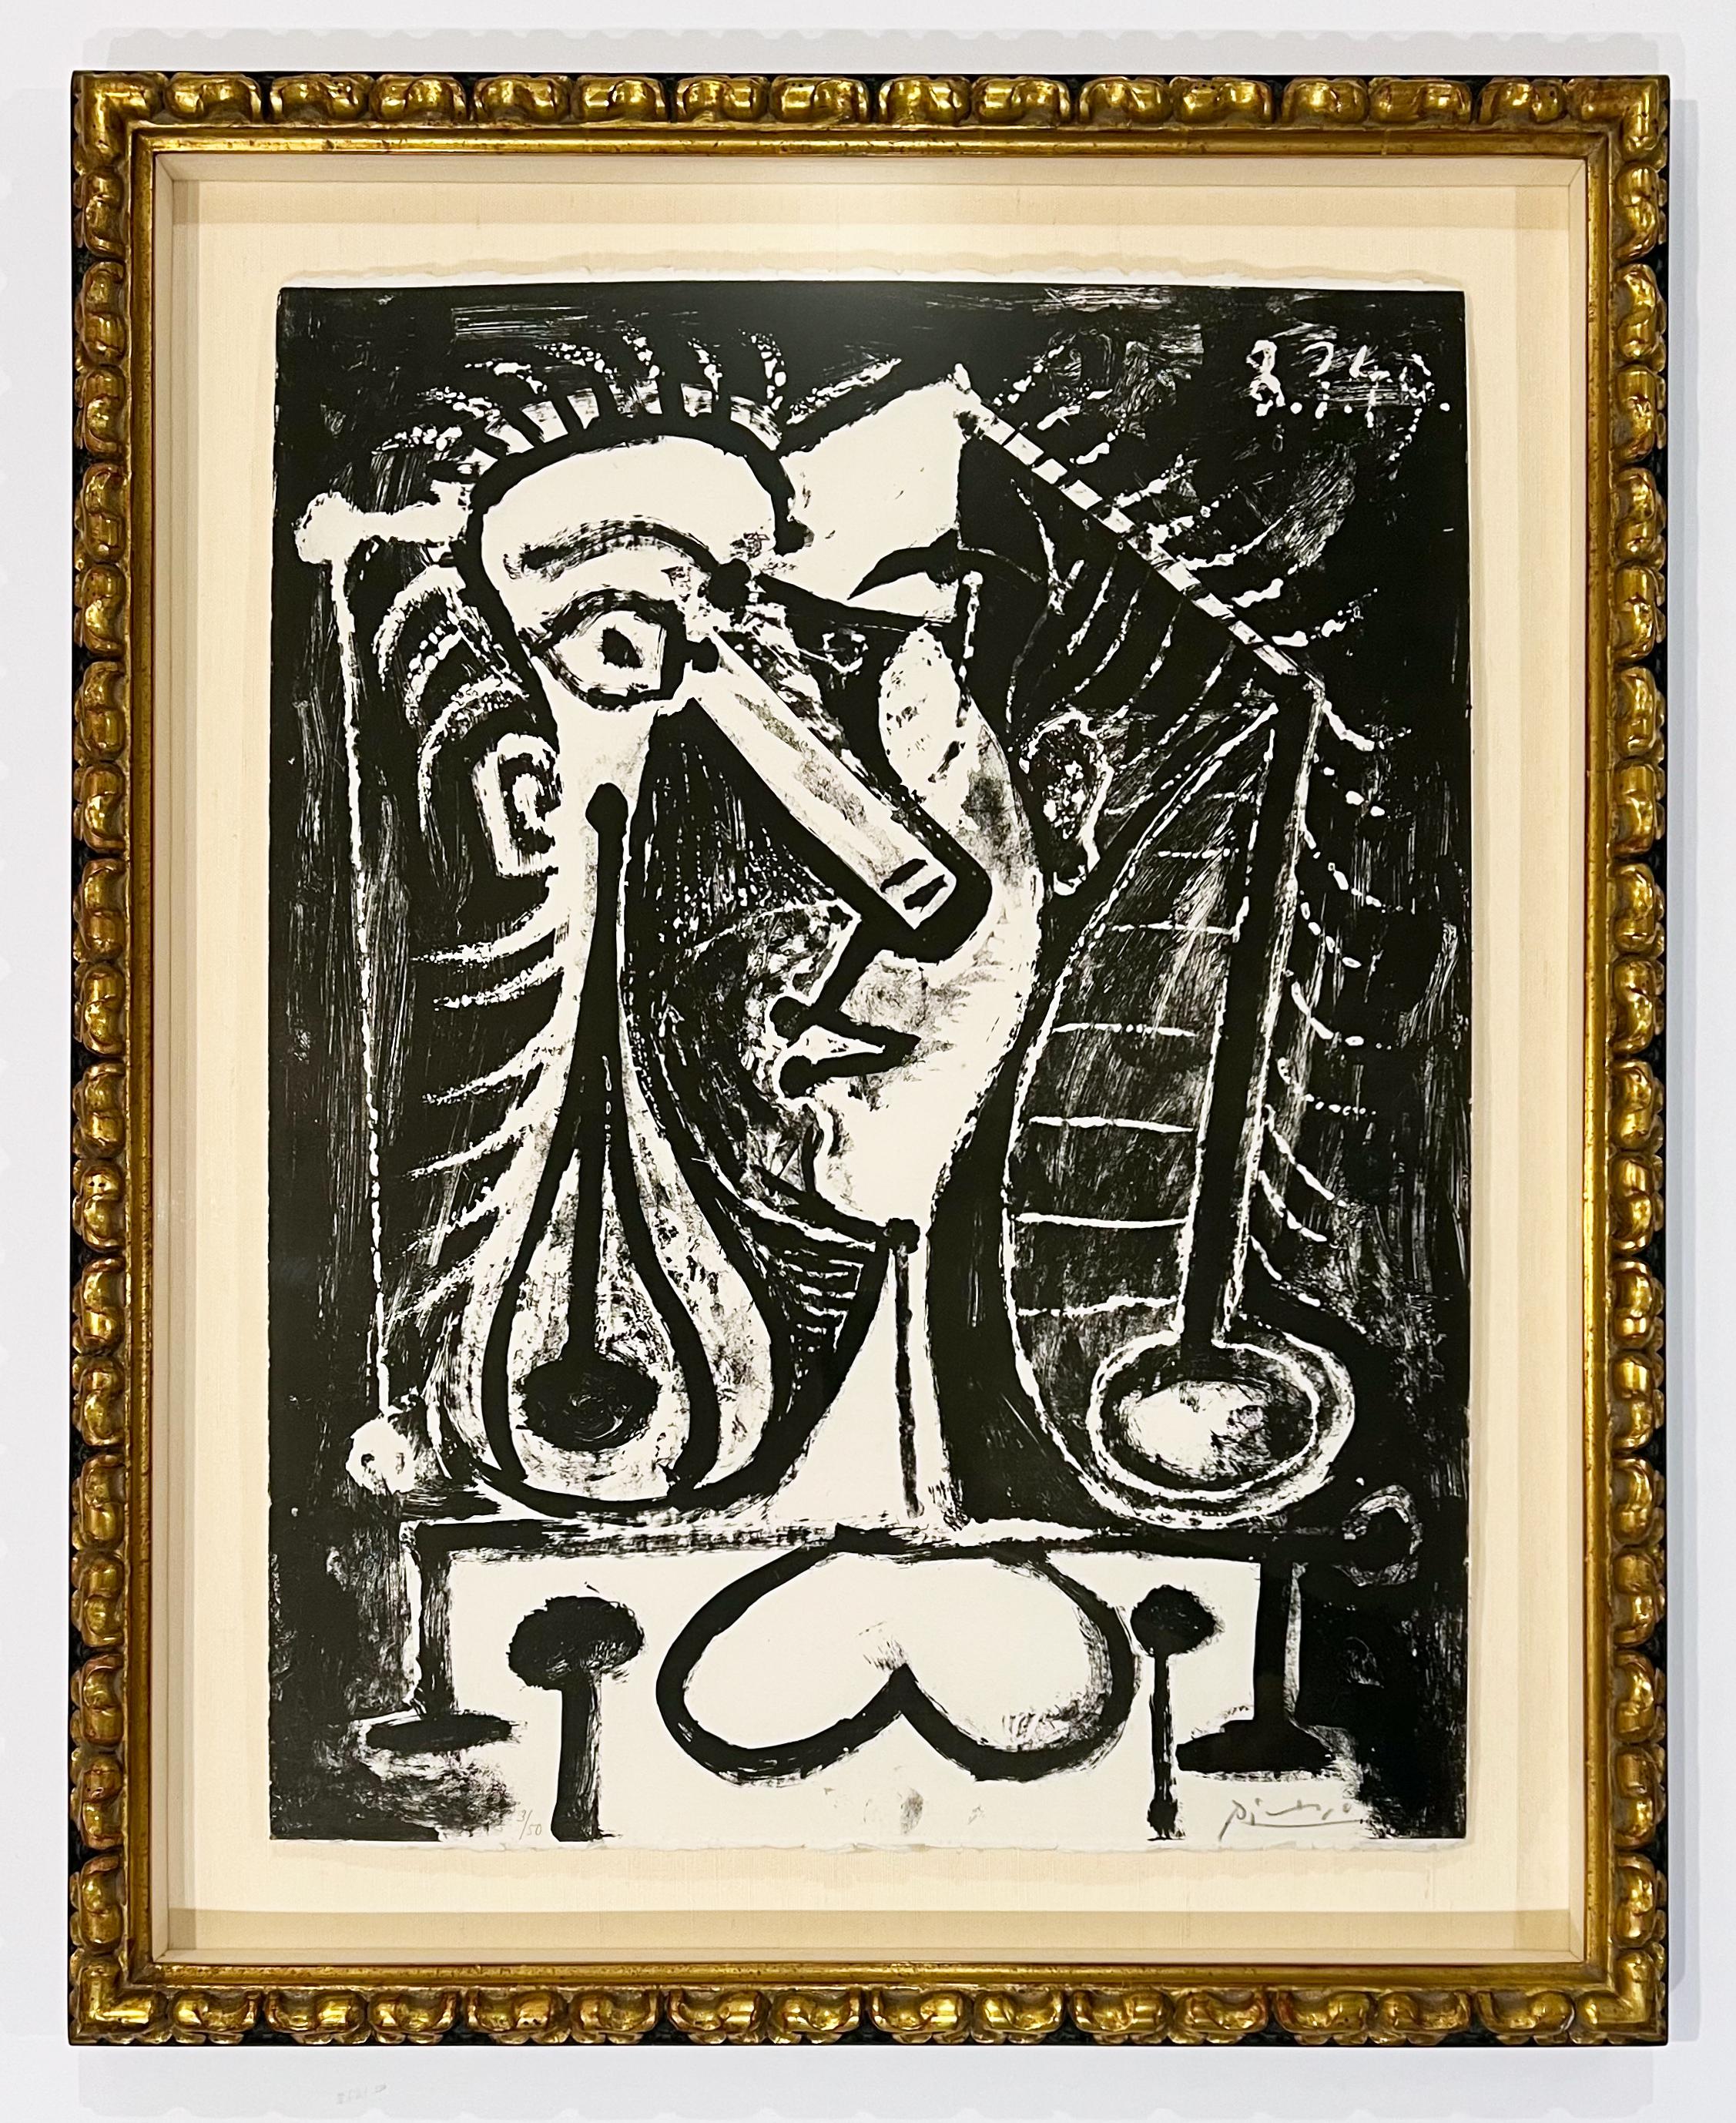 Artist: Pablo Picasso
Title: Figure Composée I
Medium: Lithograph
Year: 1949
Edition: 3/50
Frame Size: 31 1/2